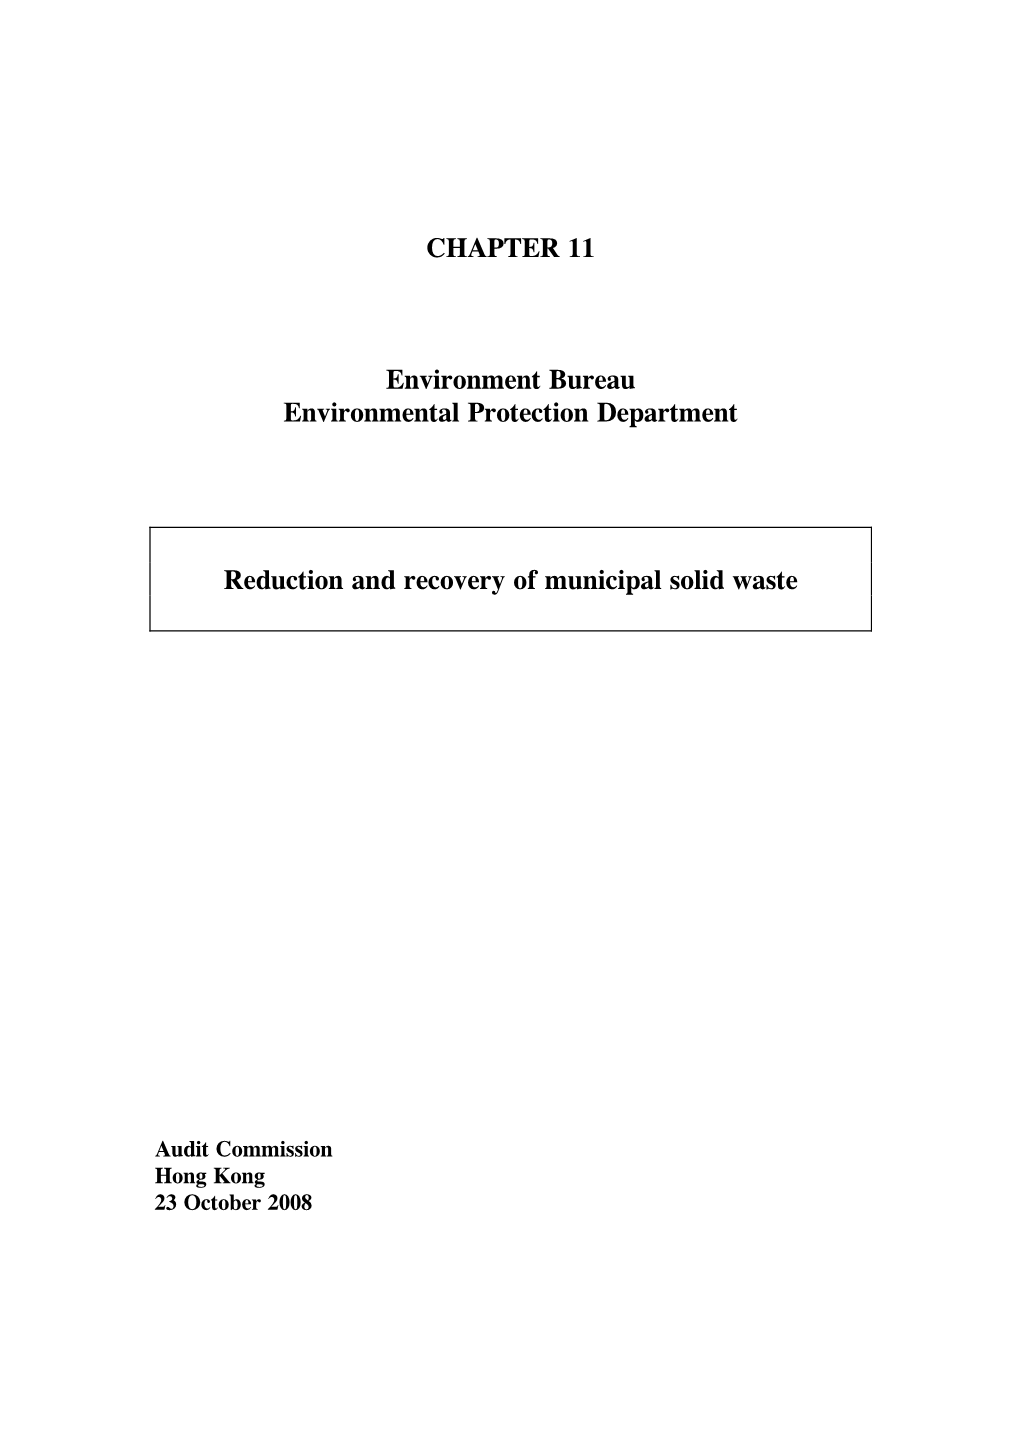 CHAPTER 11 Environment Bureau Environmental Protection